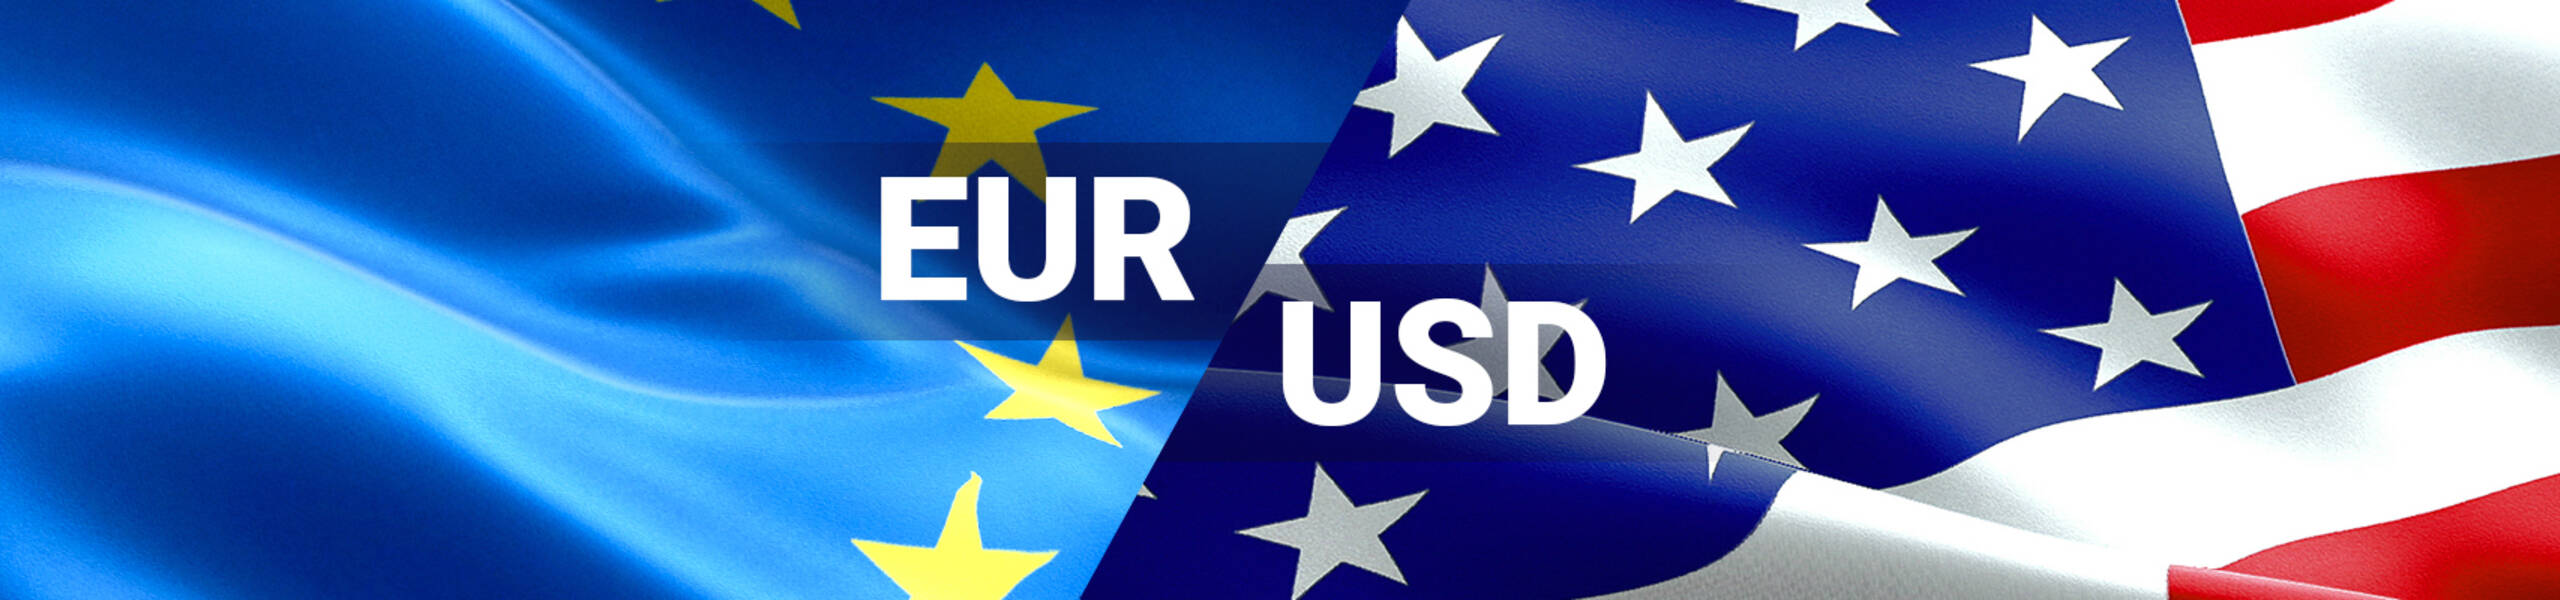 EUR/USD close to reach the 1.2476 milestone